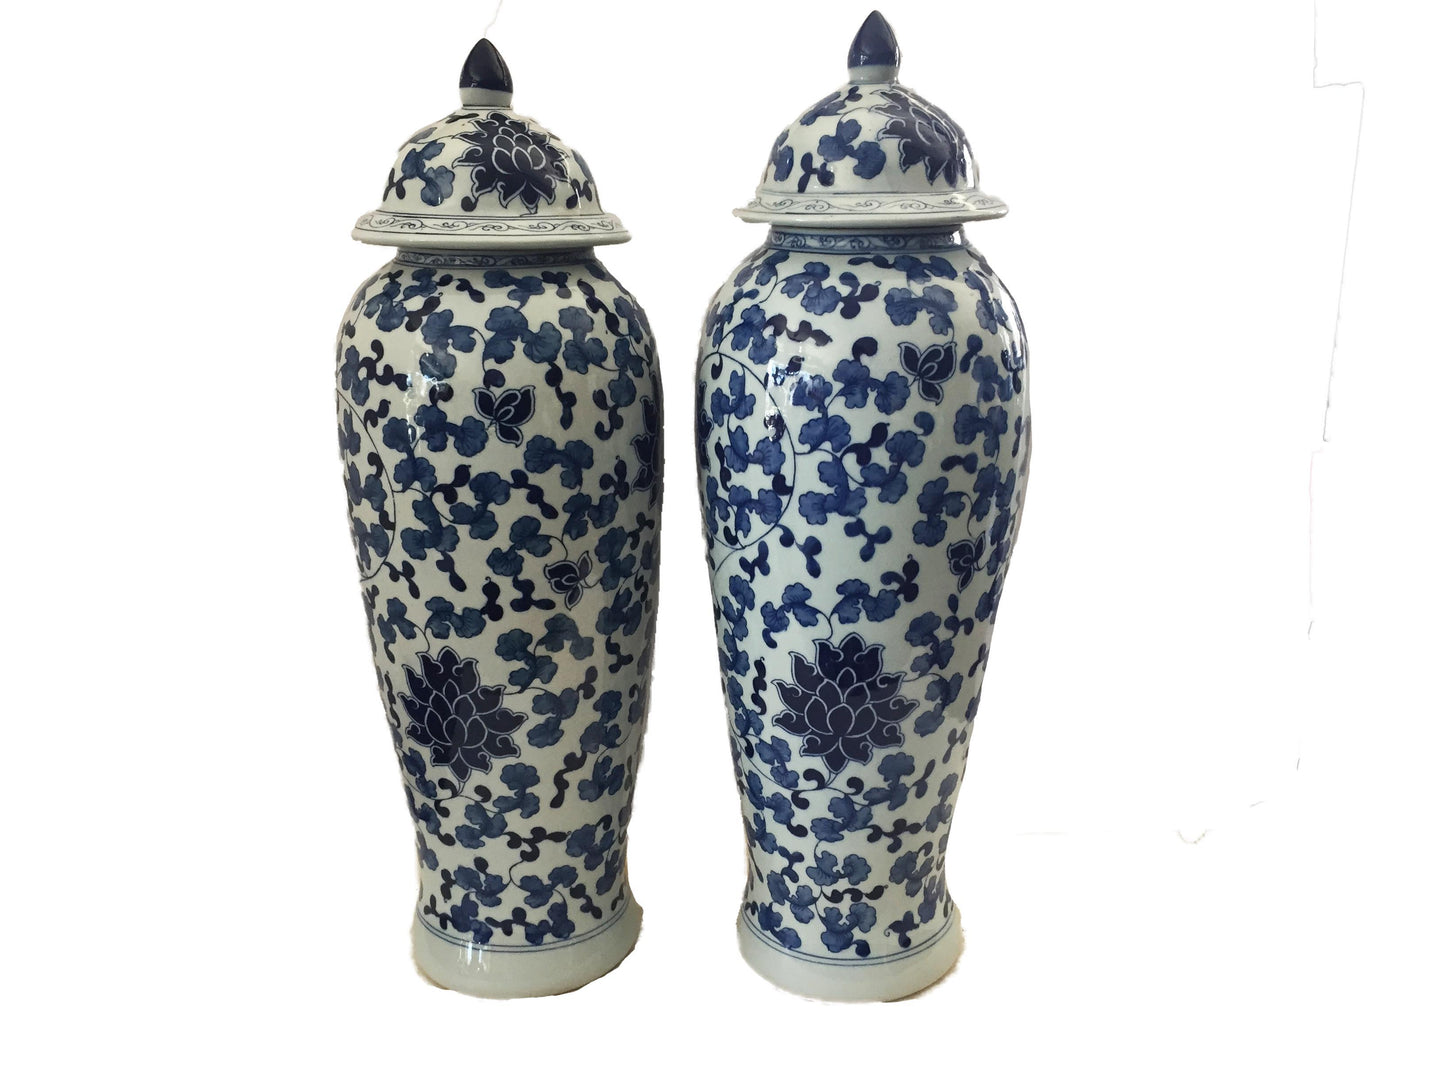 #823 Tall B&w Chinoiserie Porcelain Ginger Jars - a Pair 23" H